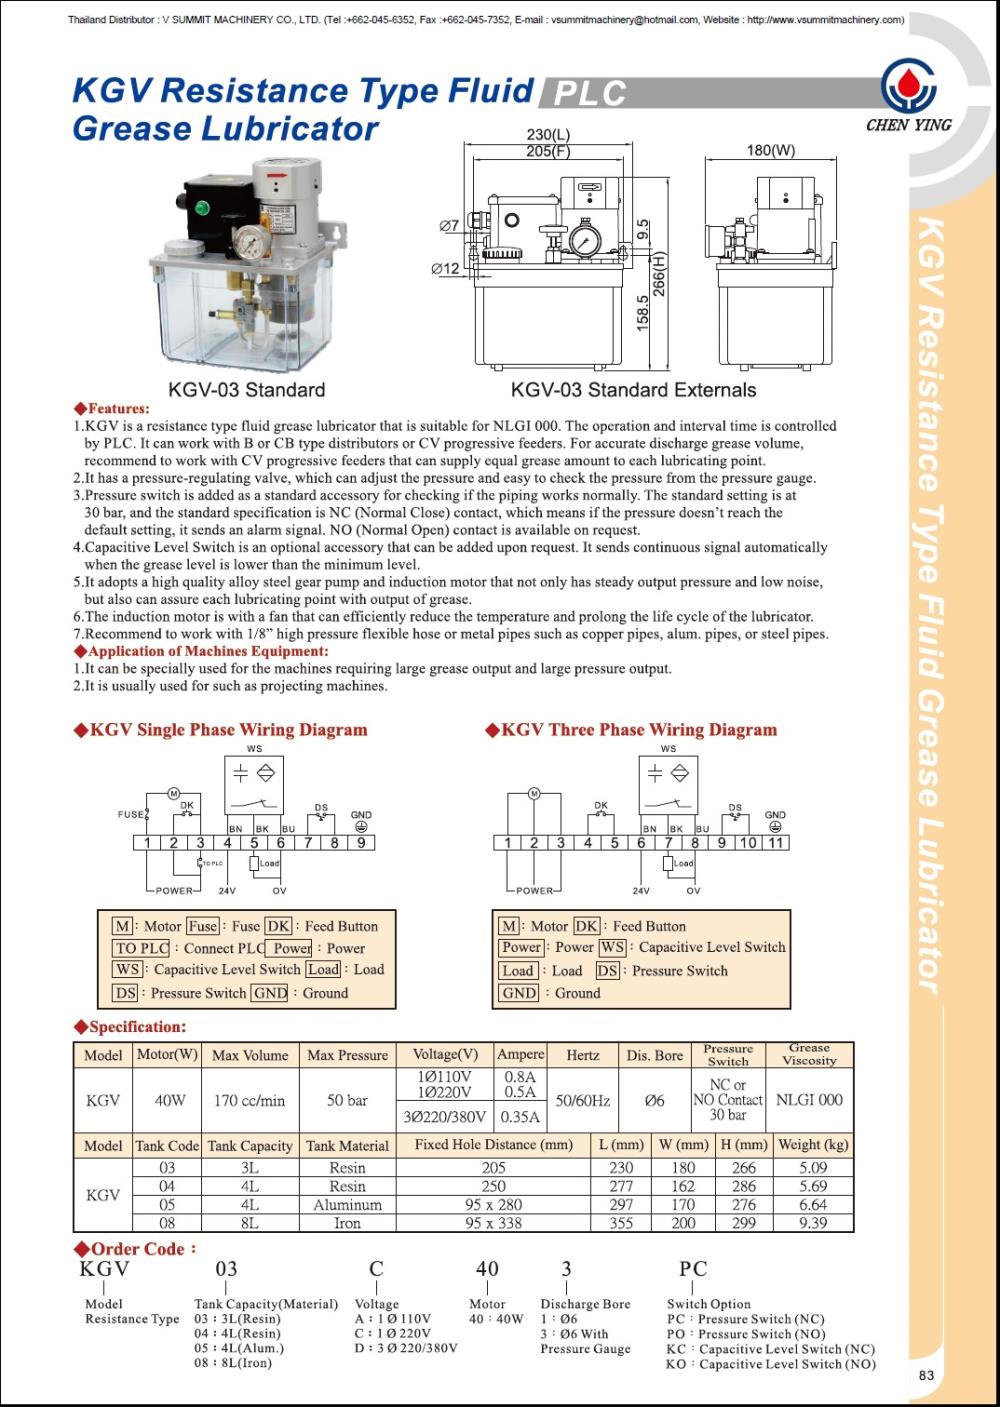 KGV Pressure-Relief Type Grease Pneumatic Lubricator,ปั๊มจารบีประเภทแรงดันระบบ PLC, ปั๊มจารบีออโต้ประเภทแรงดันระบบ PLC, เครื่องจ่ายจารบีประเภทแรงดันระบบ PLC, เครื่องจ่ายจารบีออโต้ประเภทแรงดันระบบ PLC, กาจารบีประเภทแรงดันระบบ PLC, กาจ่ายจารบีออโต้ประเภทแรงดันระบบ PLC, กาจารบีออโต้ประเภทแรงดันระบบ PLC, ปั๊มจารบีไฟฟ้าประเภทแรงดันระบบ PLC, เครื่องจ่ายจารบีไฟฟ้าประเภทแรงดันระบบ PLC, กาจารบีไฟฟ้าประเภทแรงดันระบบ PLC 